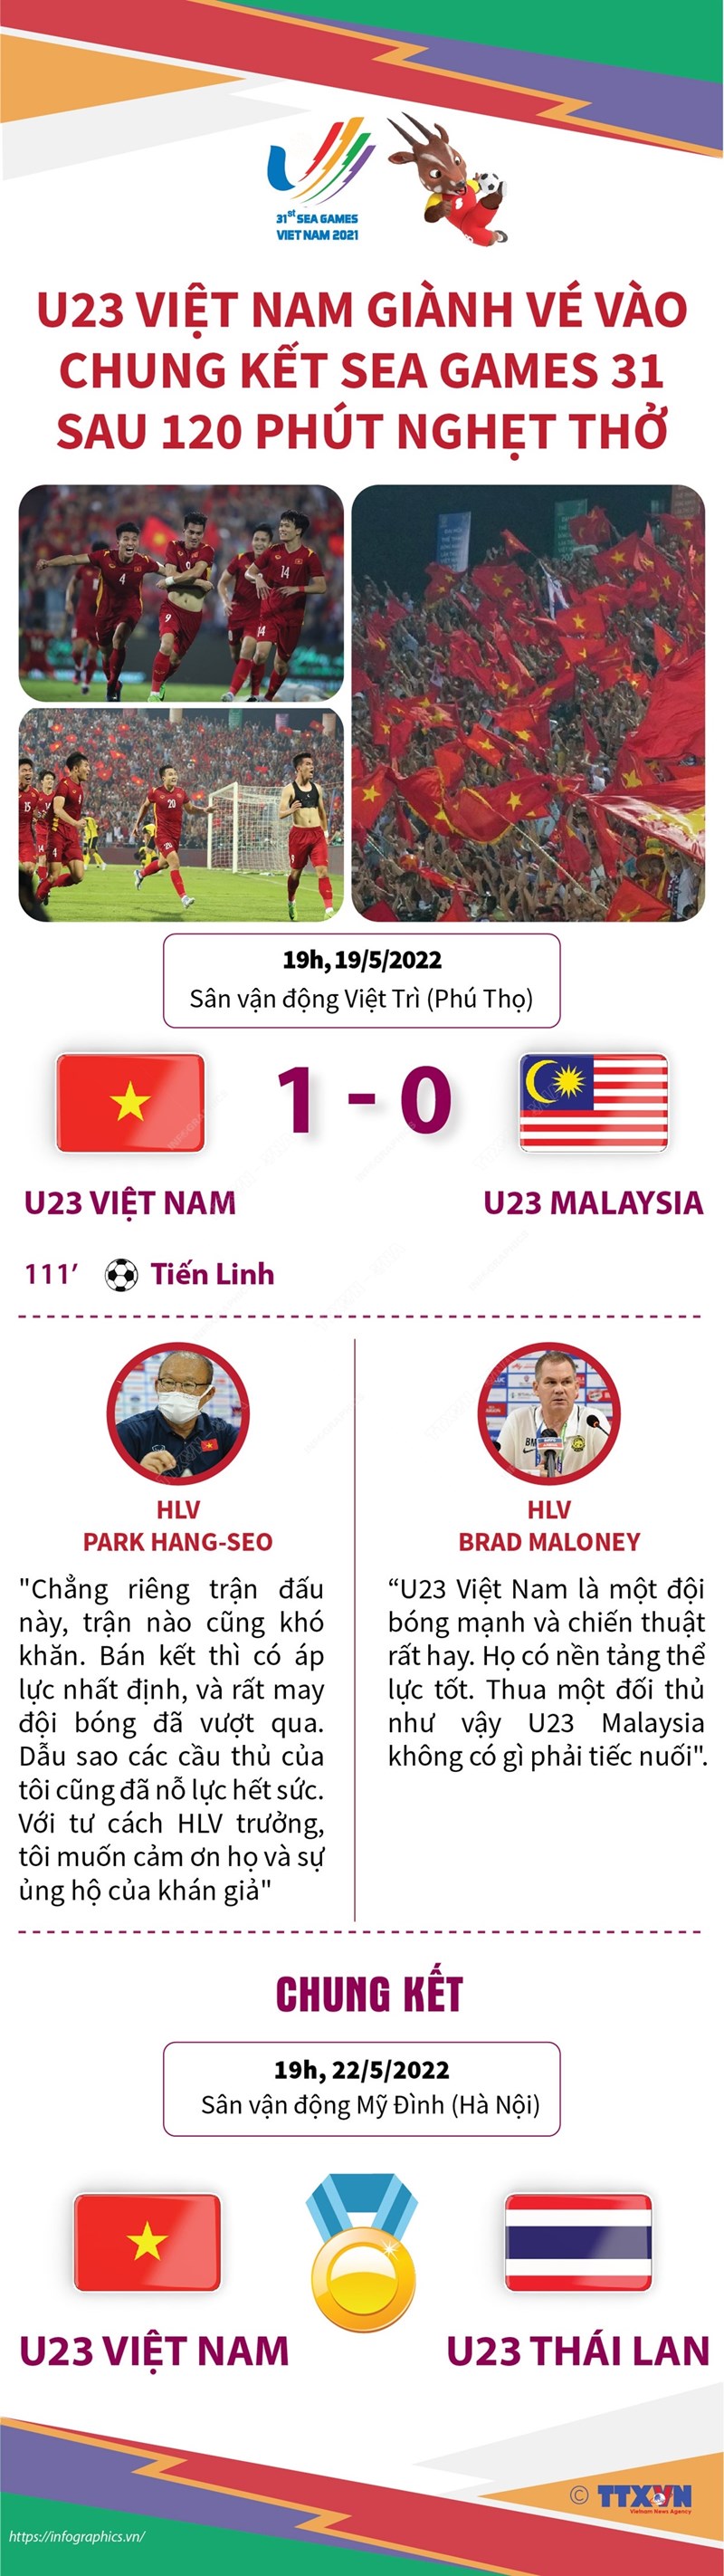 U23 Viet Nam gianh ve vao chung ket sau 120 phut nghet tho hinh anh 1